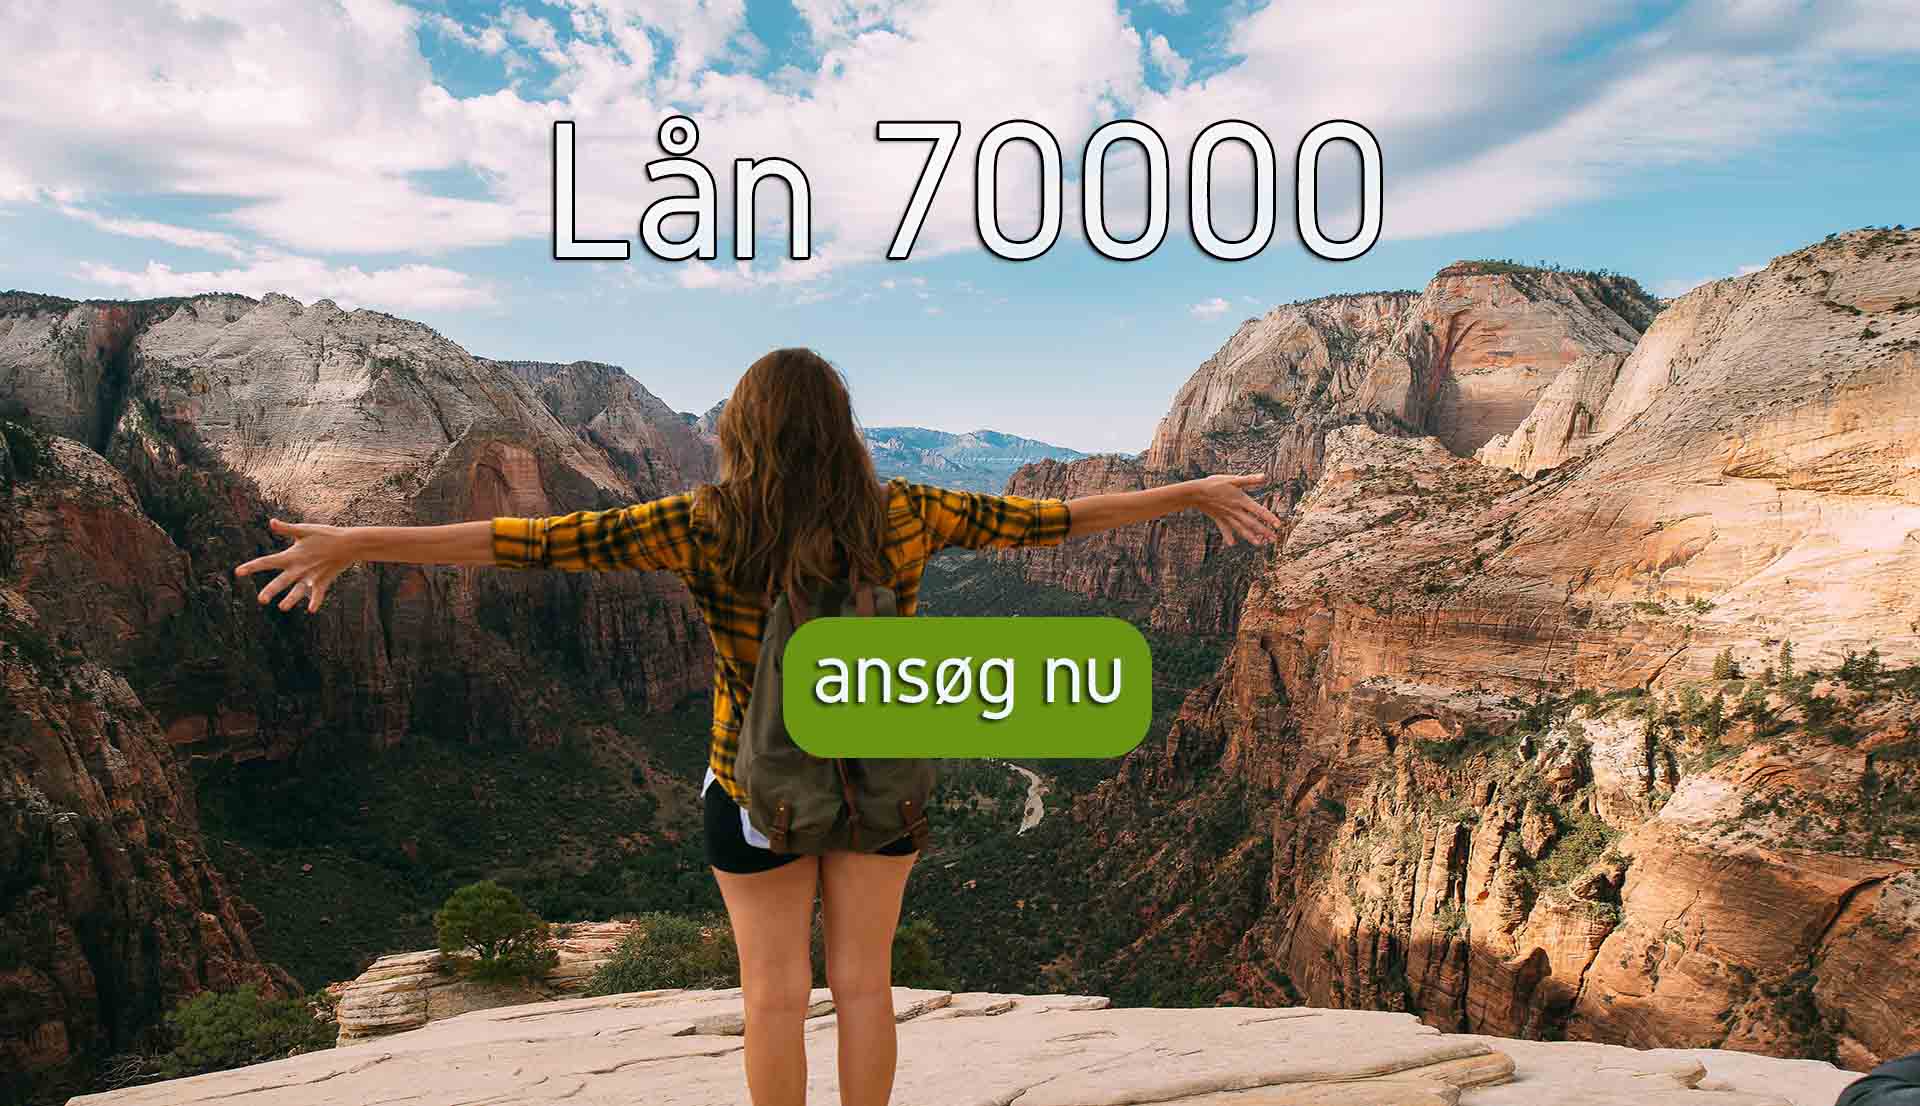 Lån 70000